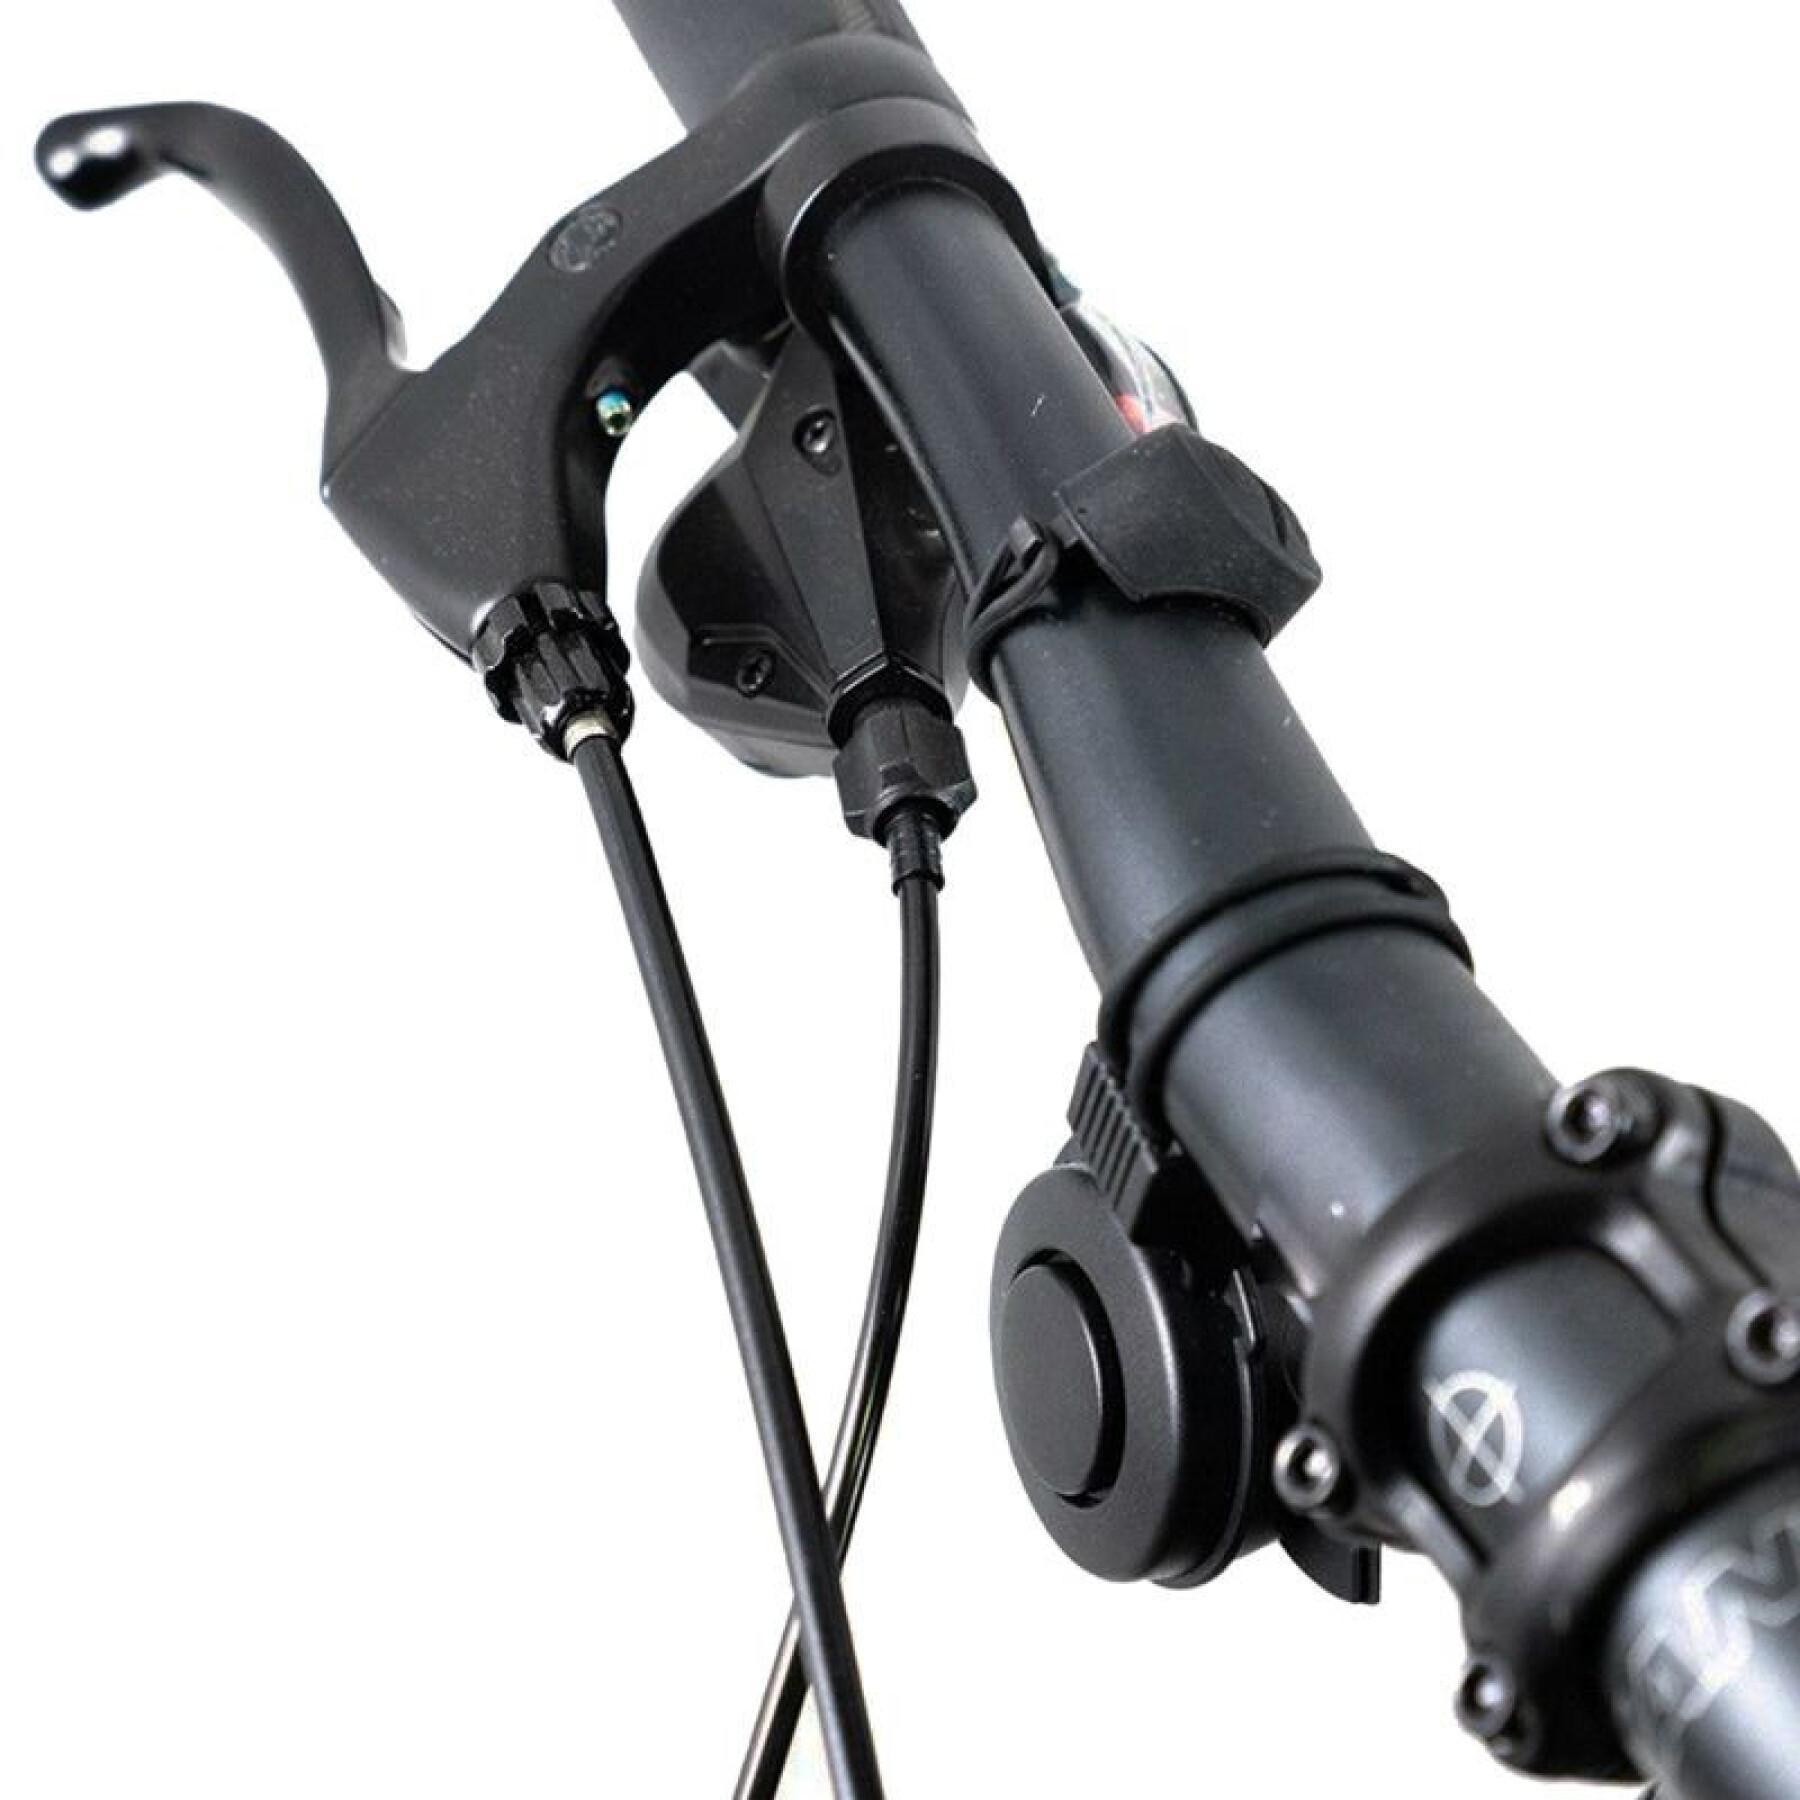 Klingel - Hupe Fahrrad - Roller elektronisch wiederaufladbar usb - 4 Töne 110-120 Dezibel Kind P2R